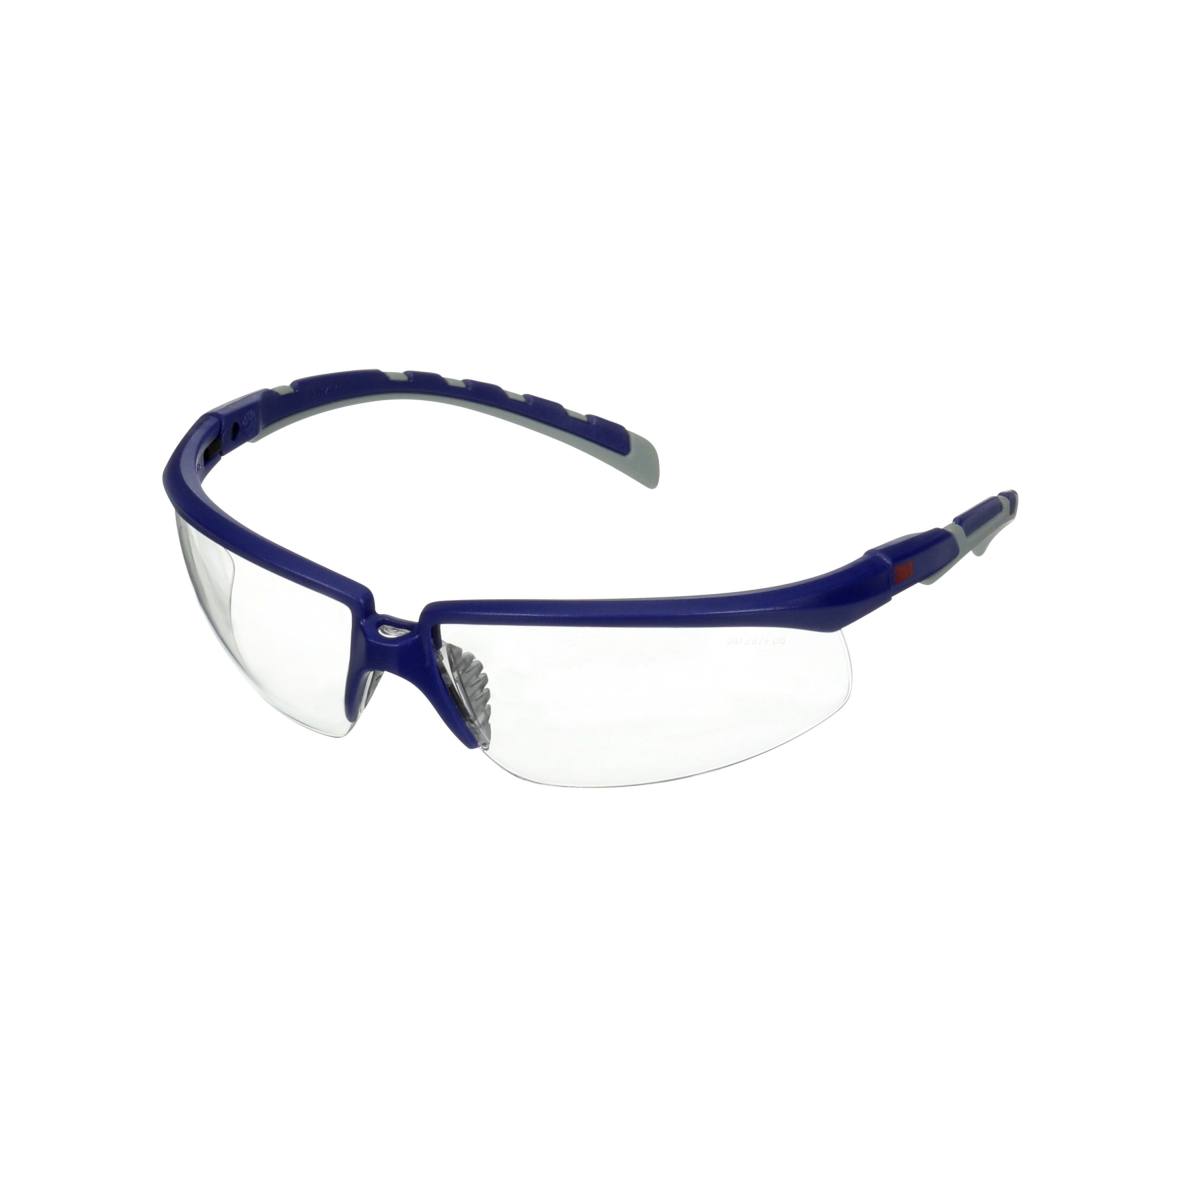 3M Occhiali di sicurezza Solus 2000, aste blu/grigio, antigraffio+ (K), lenti chiare, regolazione angolare, S2001ASP-BLU-EU